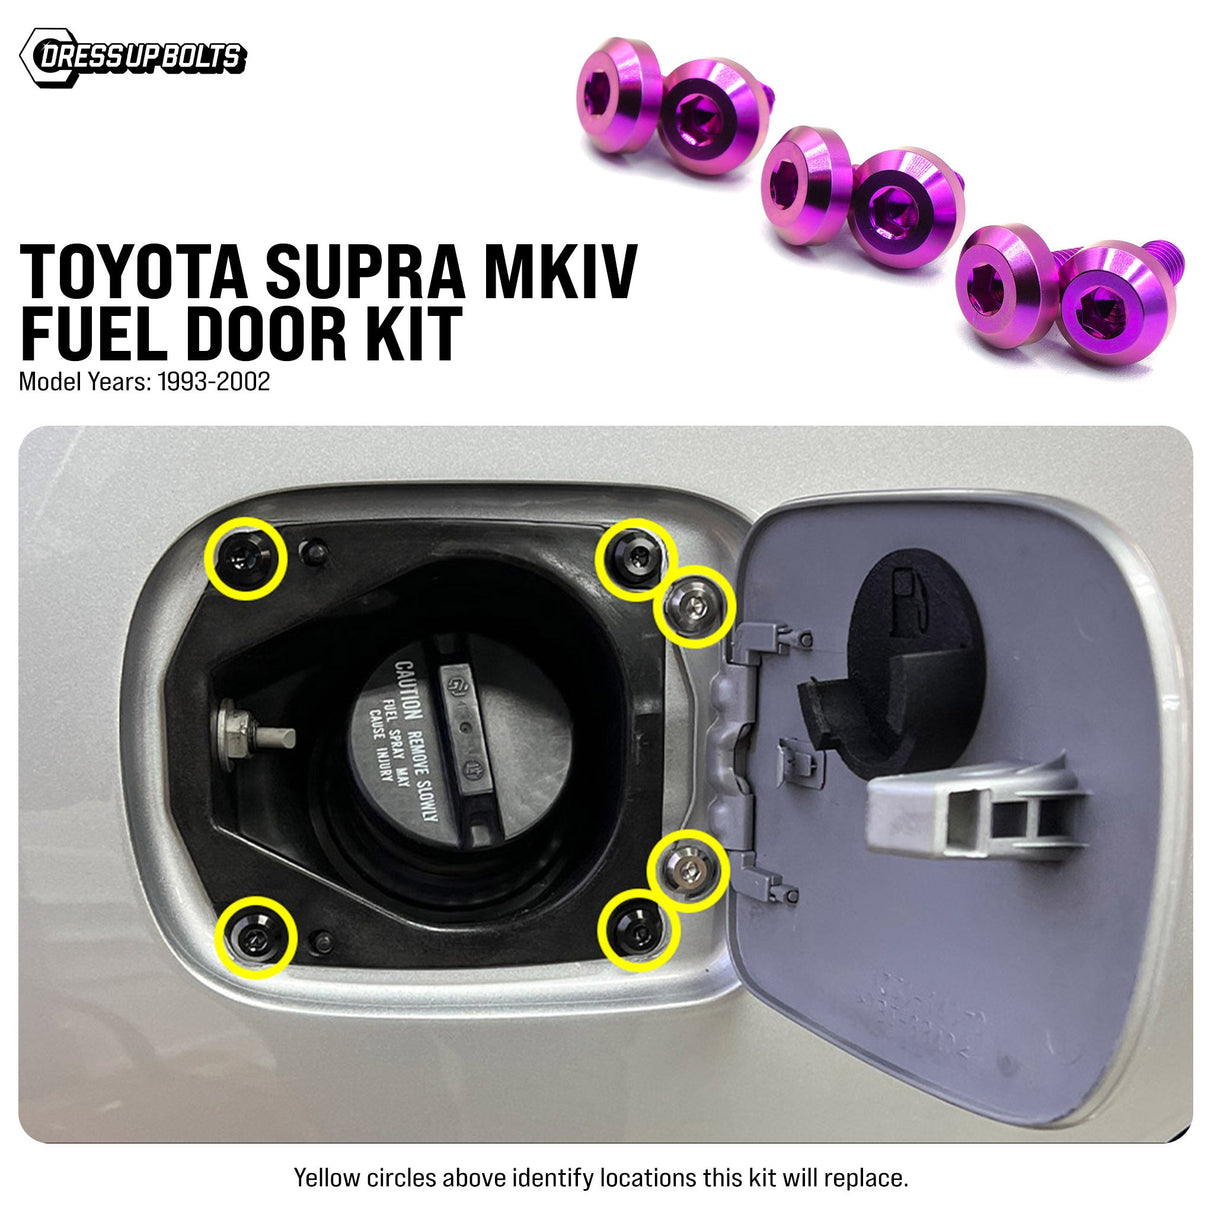 Dress Up Bolts Titanium Hardware Fuel Door Kit - Toyota Supra MKIV (1993-2002)